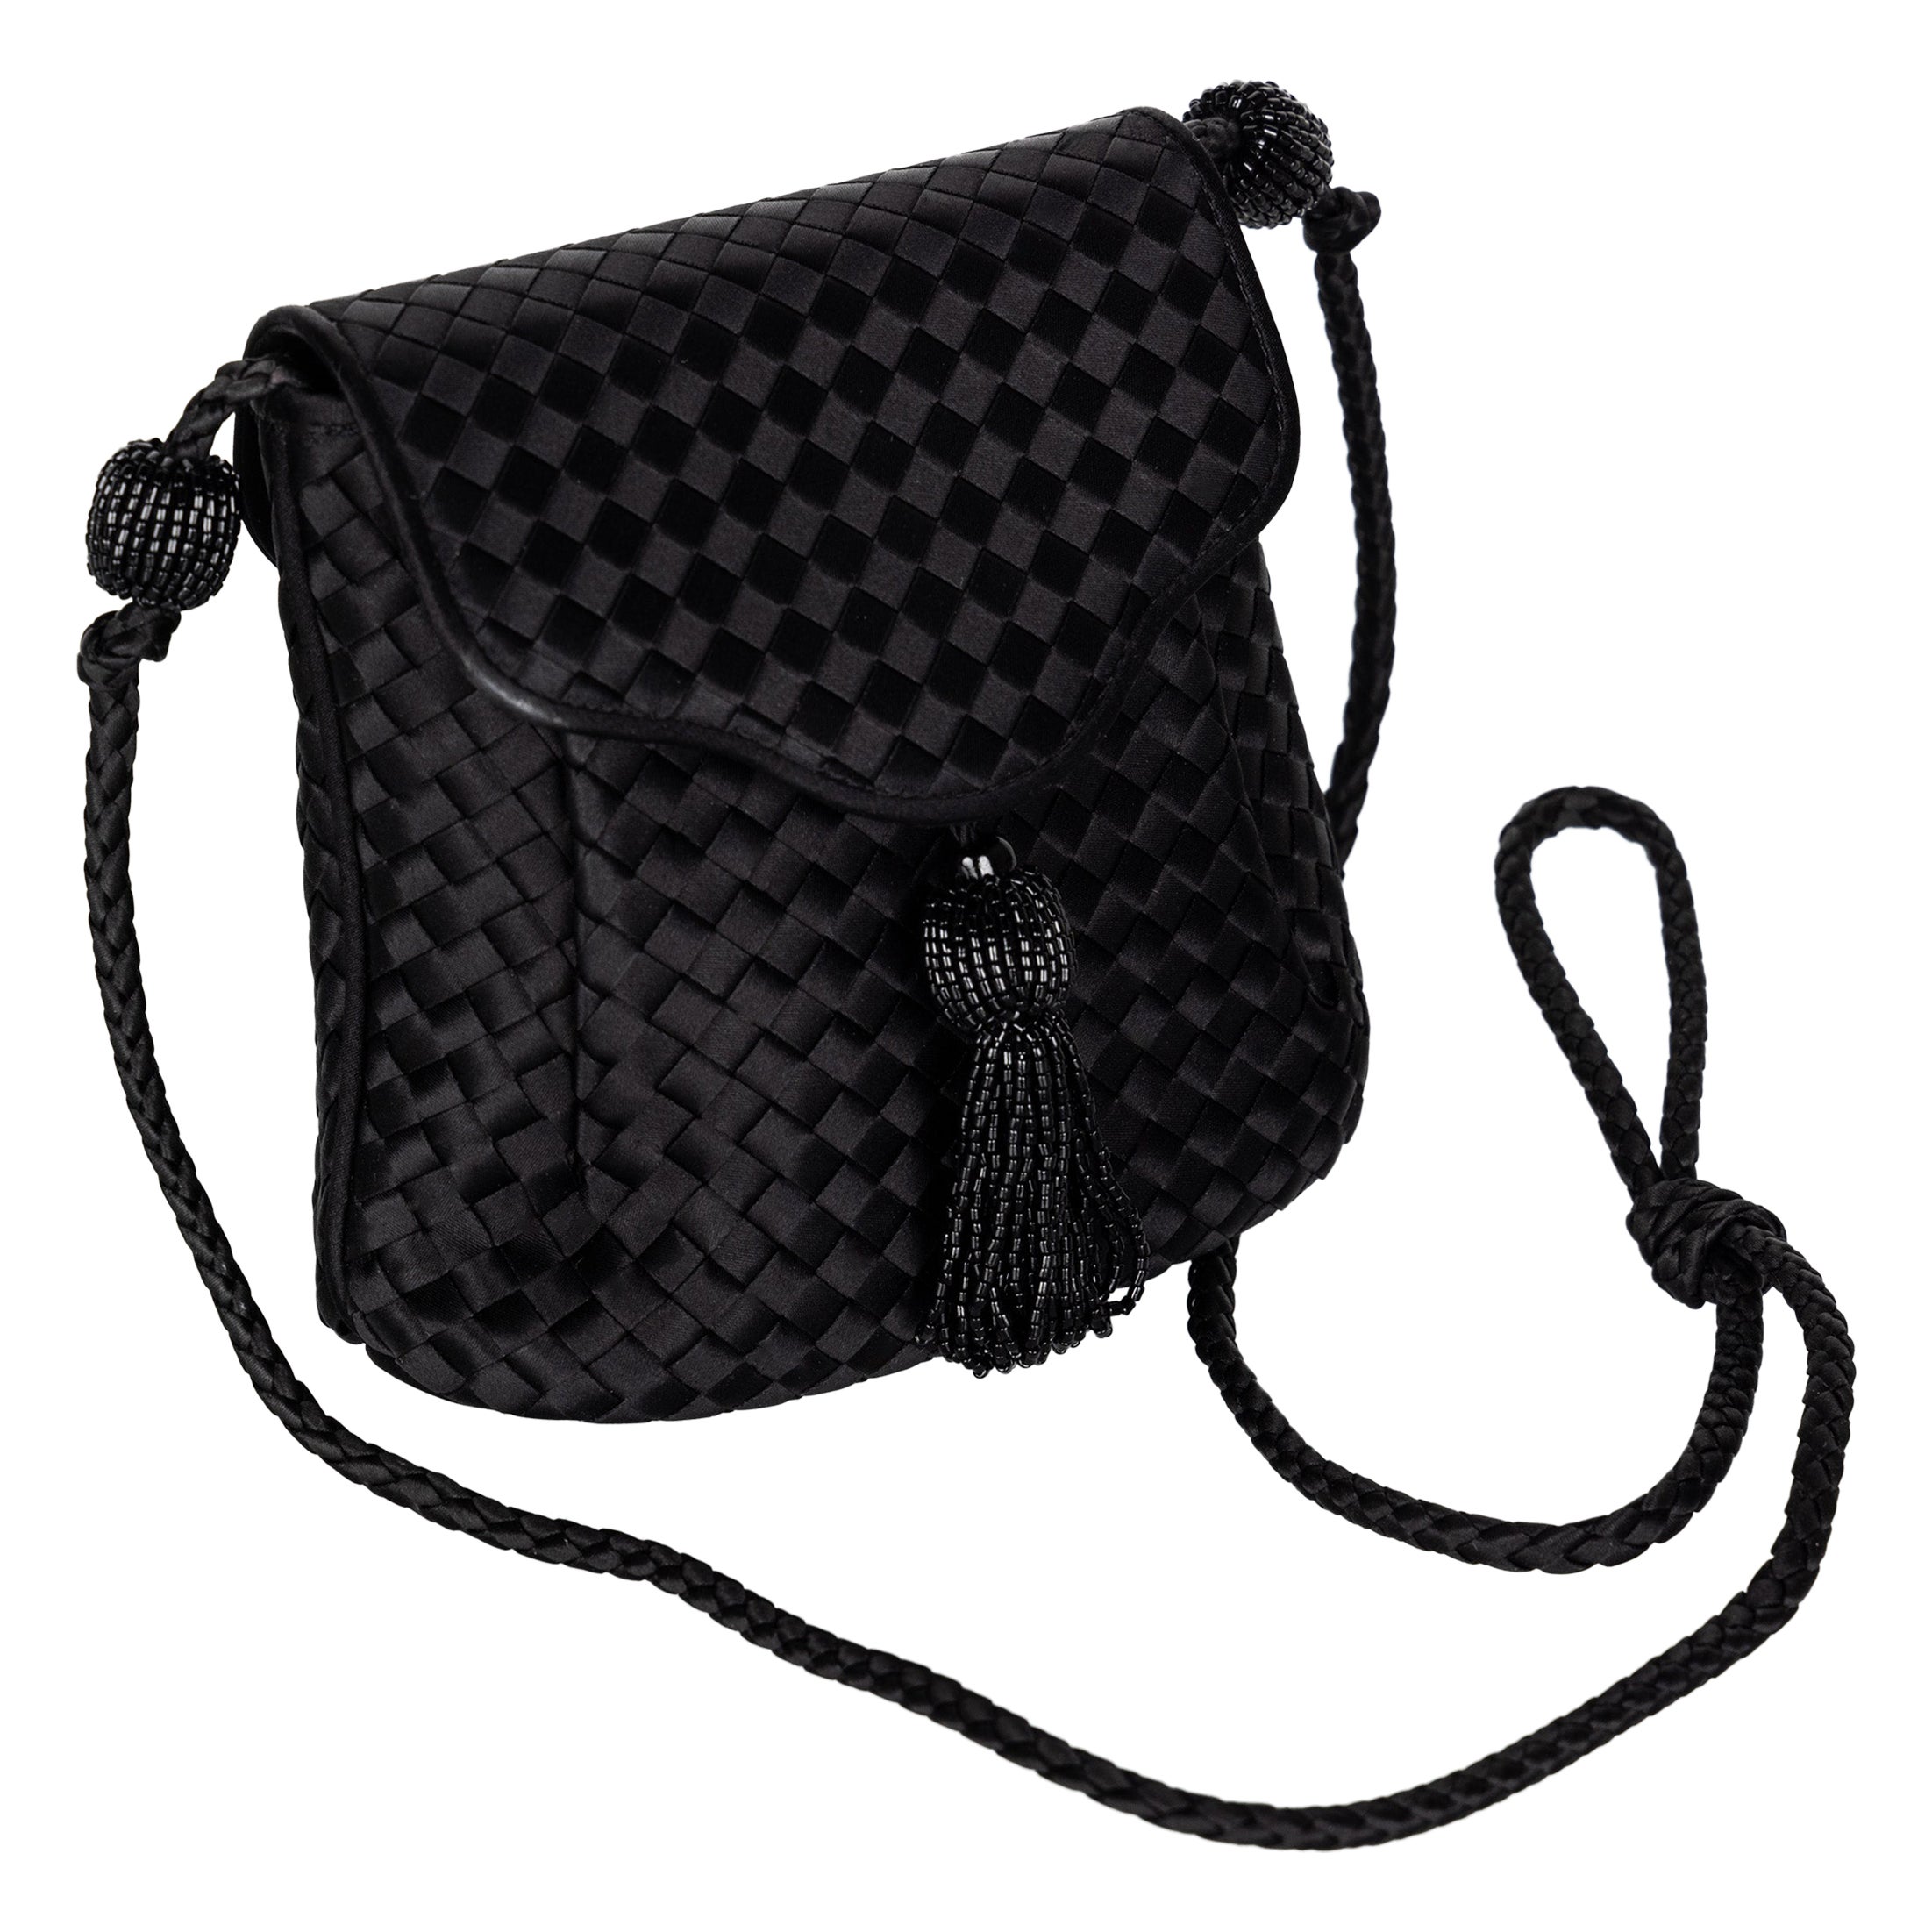 Chanel Black Lizard 'CC' Camera Bag Mini Q6B0G71MK9003